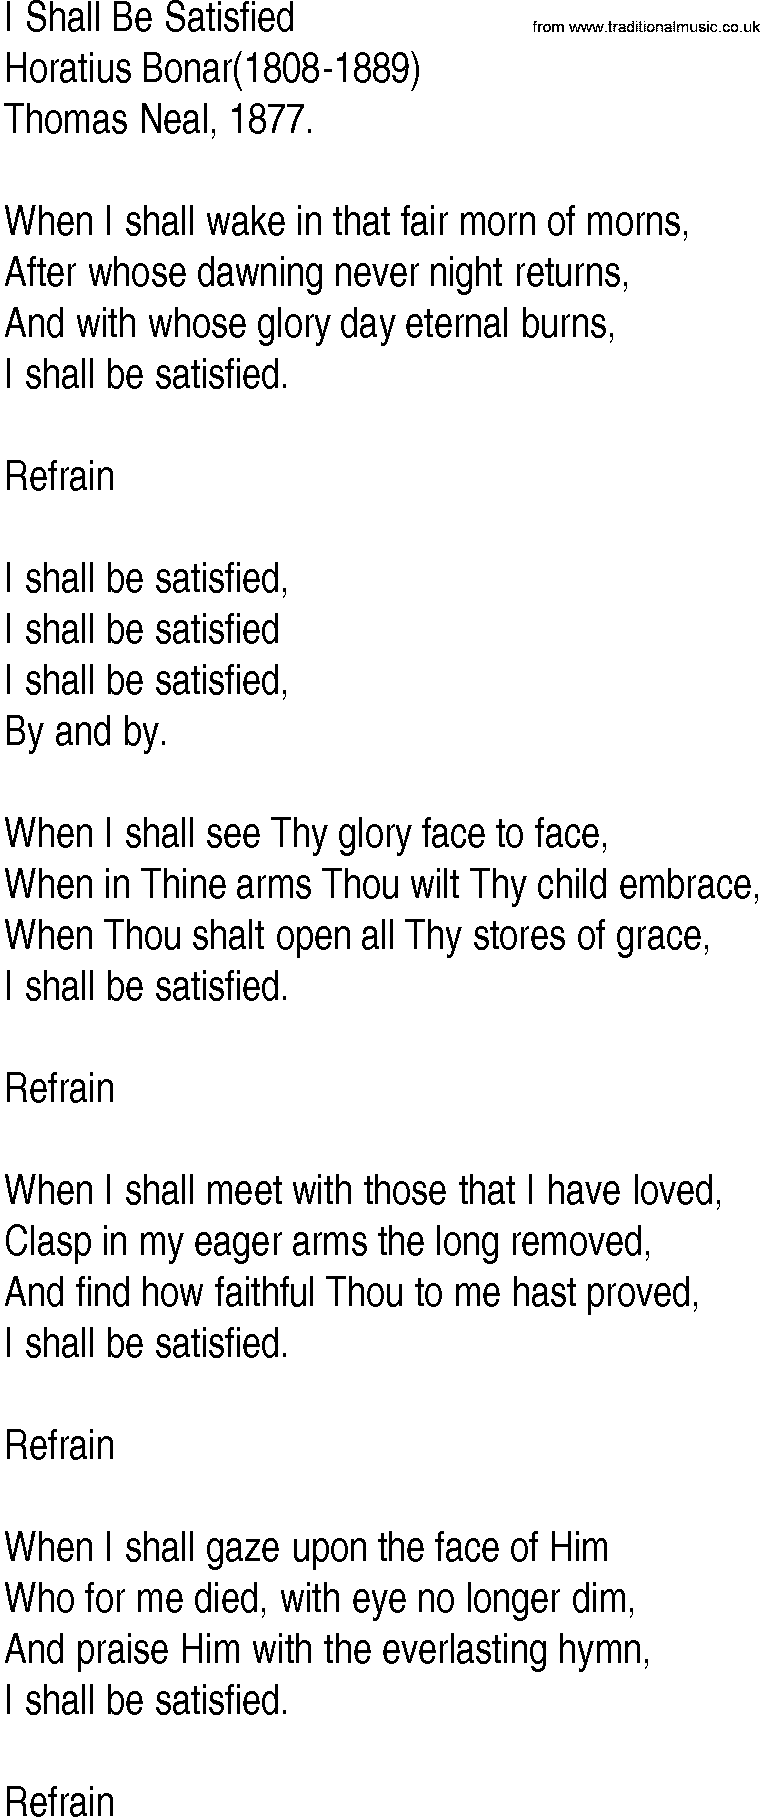 Hymn and Gospel Song: I Shall Be Satisfied by Horatius Bonar lyrics